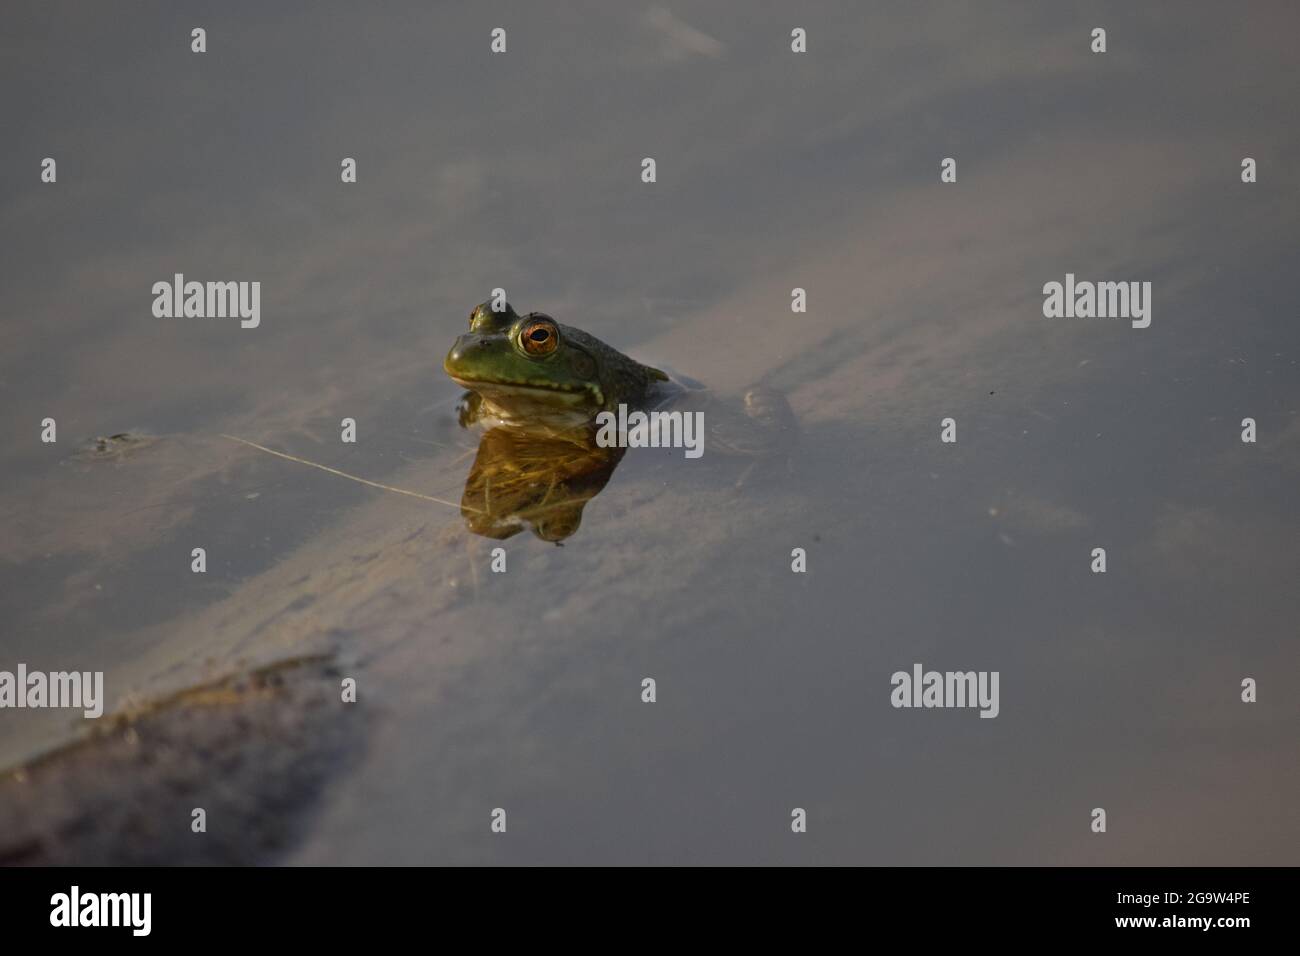 American Bullfrog Frog in water at pond Stock Photo